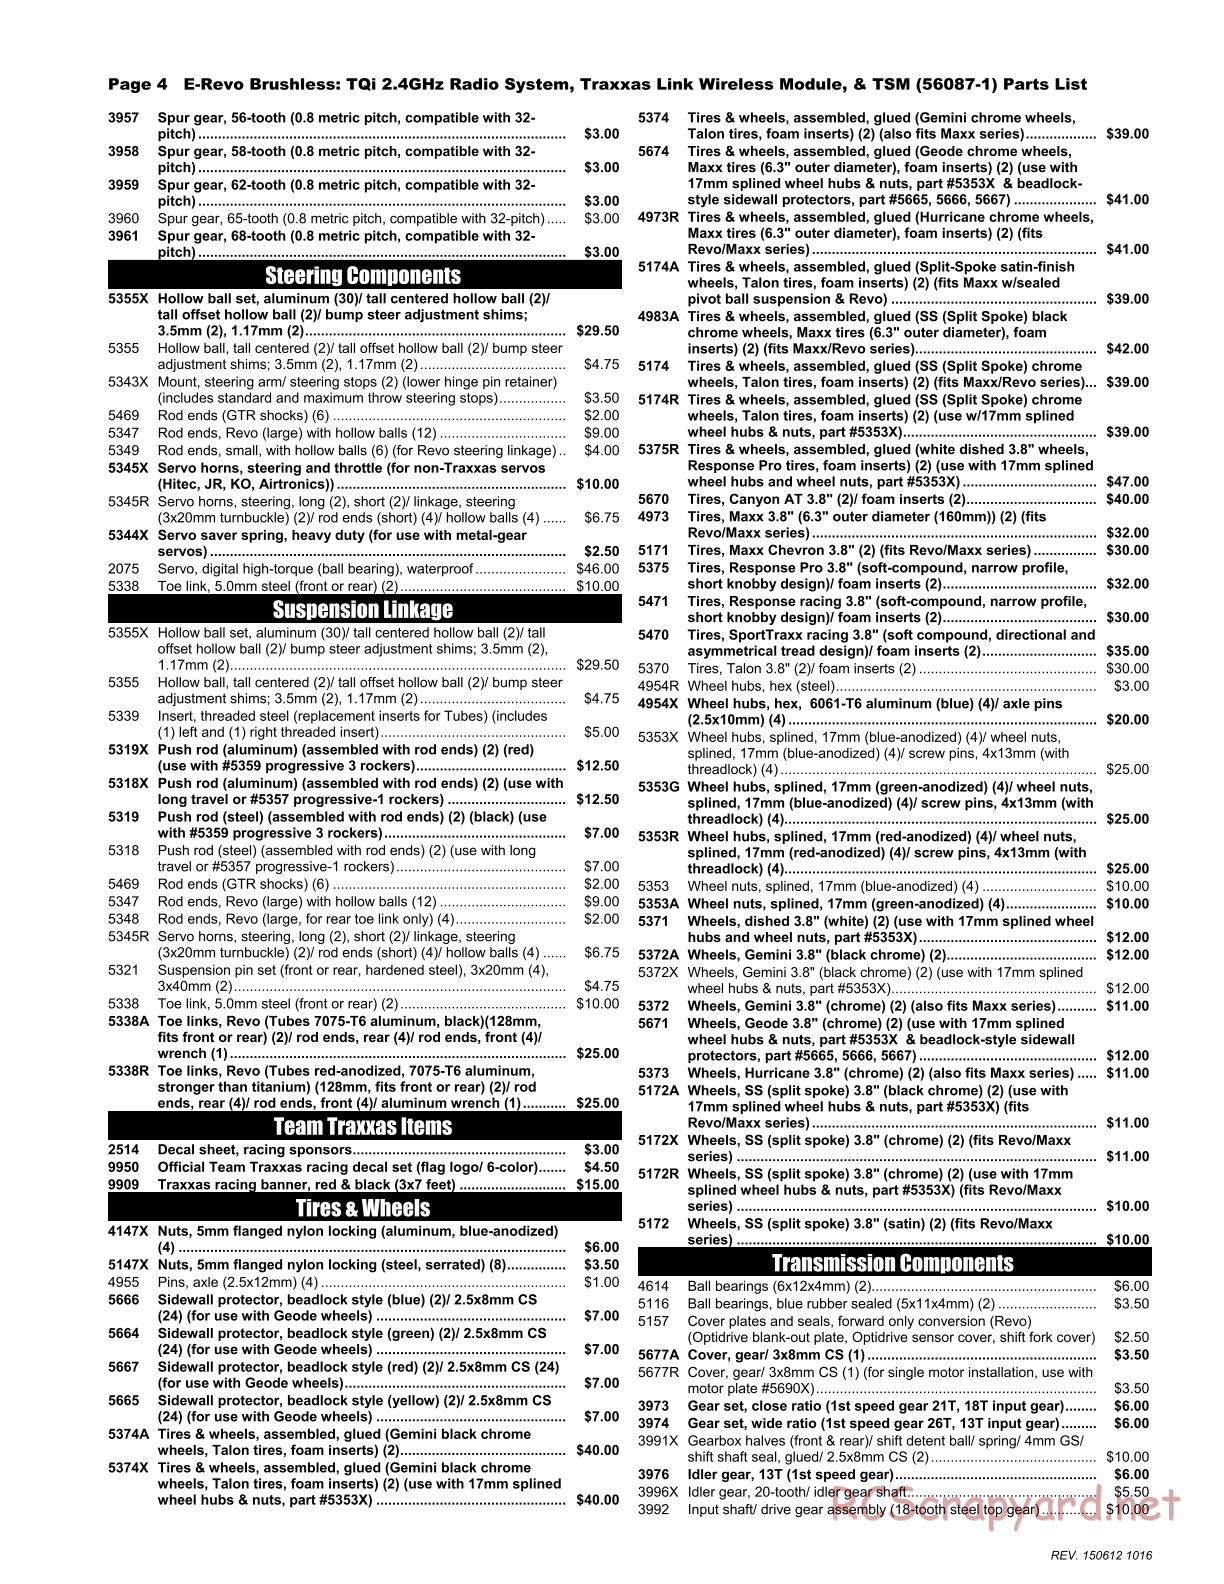 Traxxas - E-Revo Brushless TSM - Parts List - Page 4